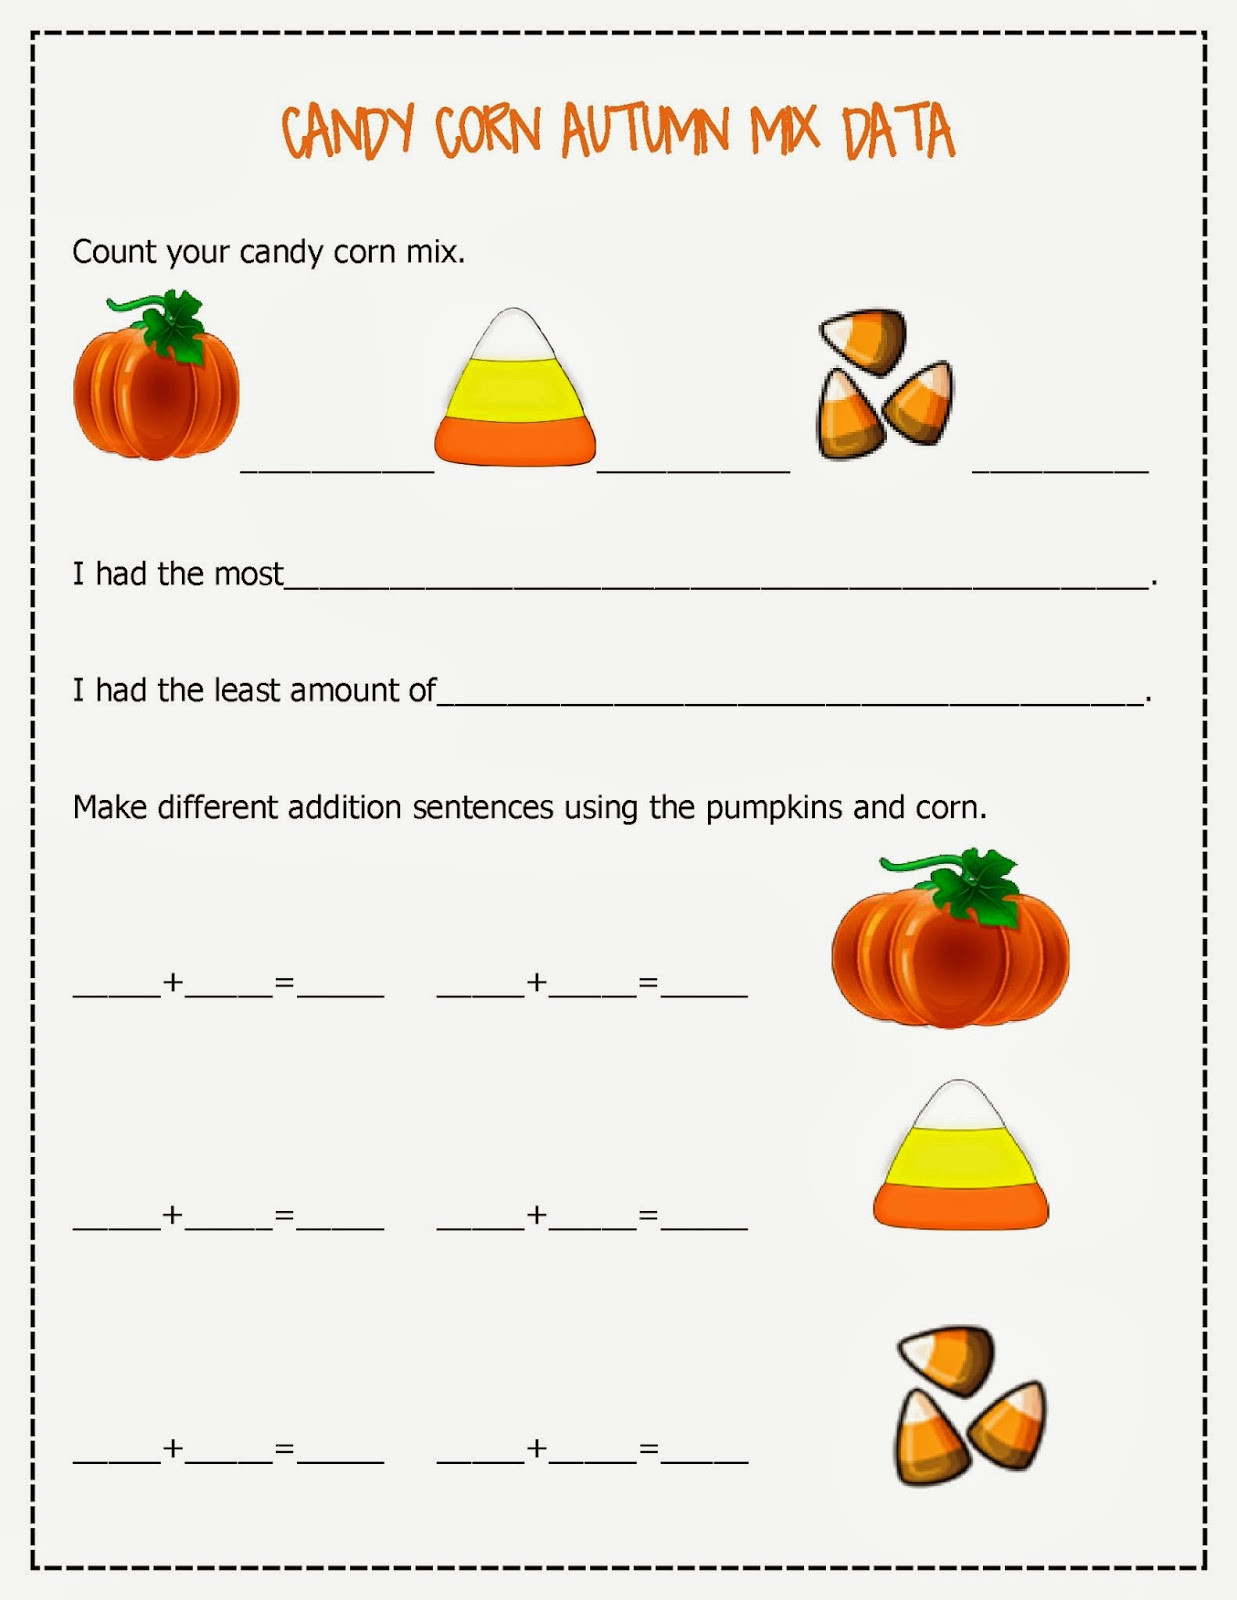 full candy corn autumn mix free math worksheets mehaffey moments